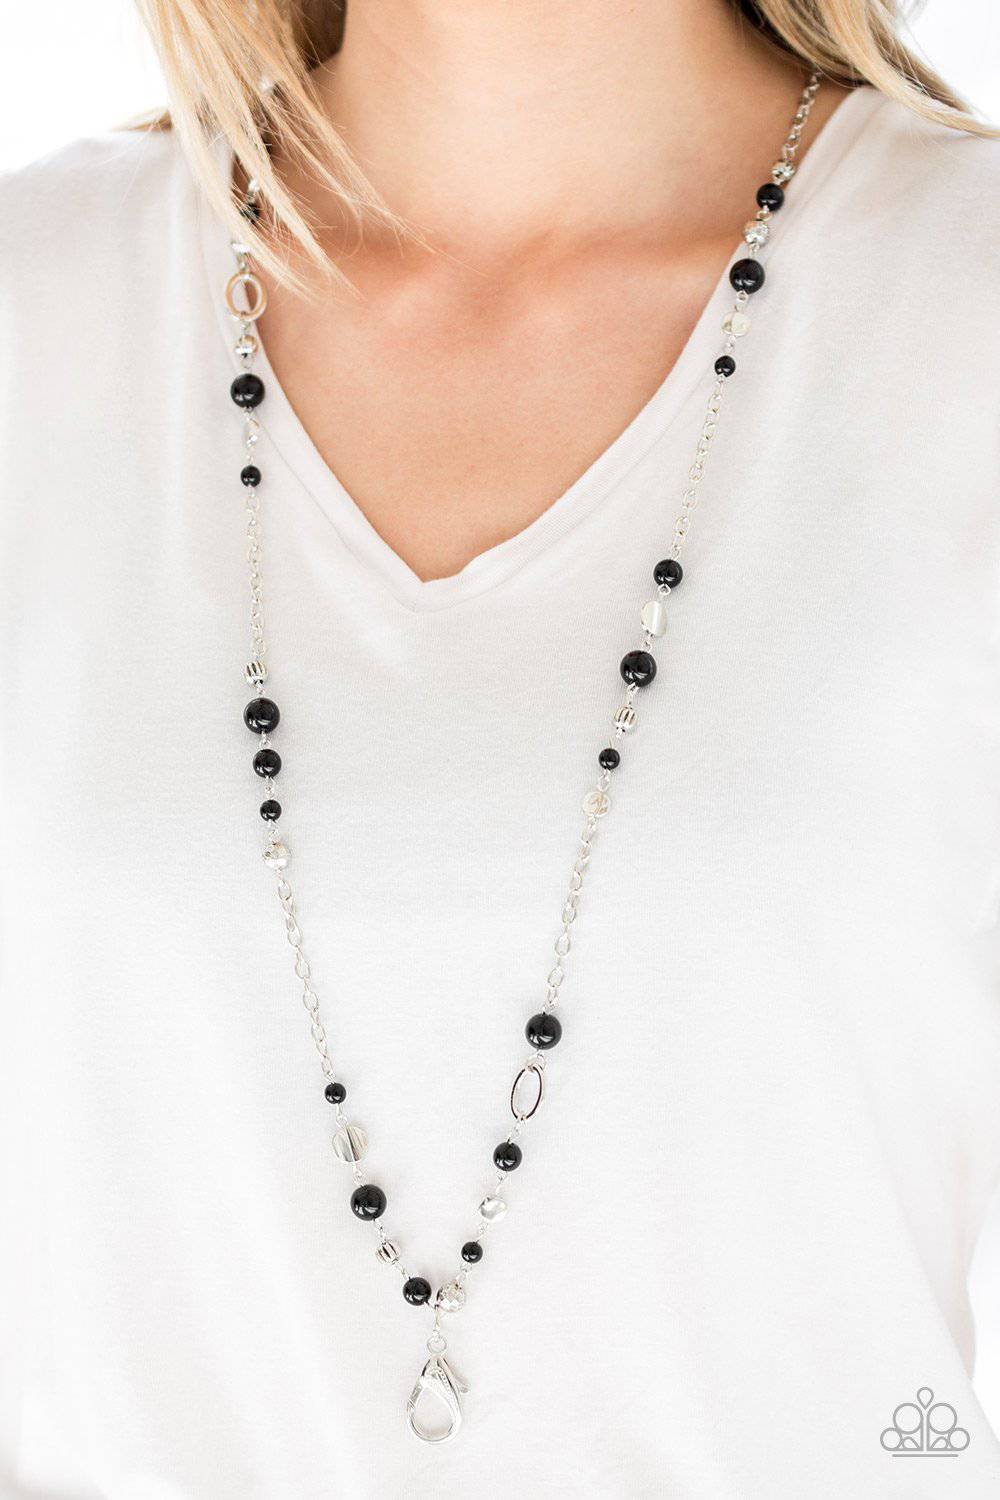 Make An Appearance - Black Lanyard Necklace - Paparazzi Accessories - GlaMarous Titi Jewels